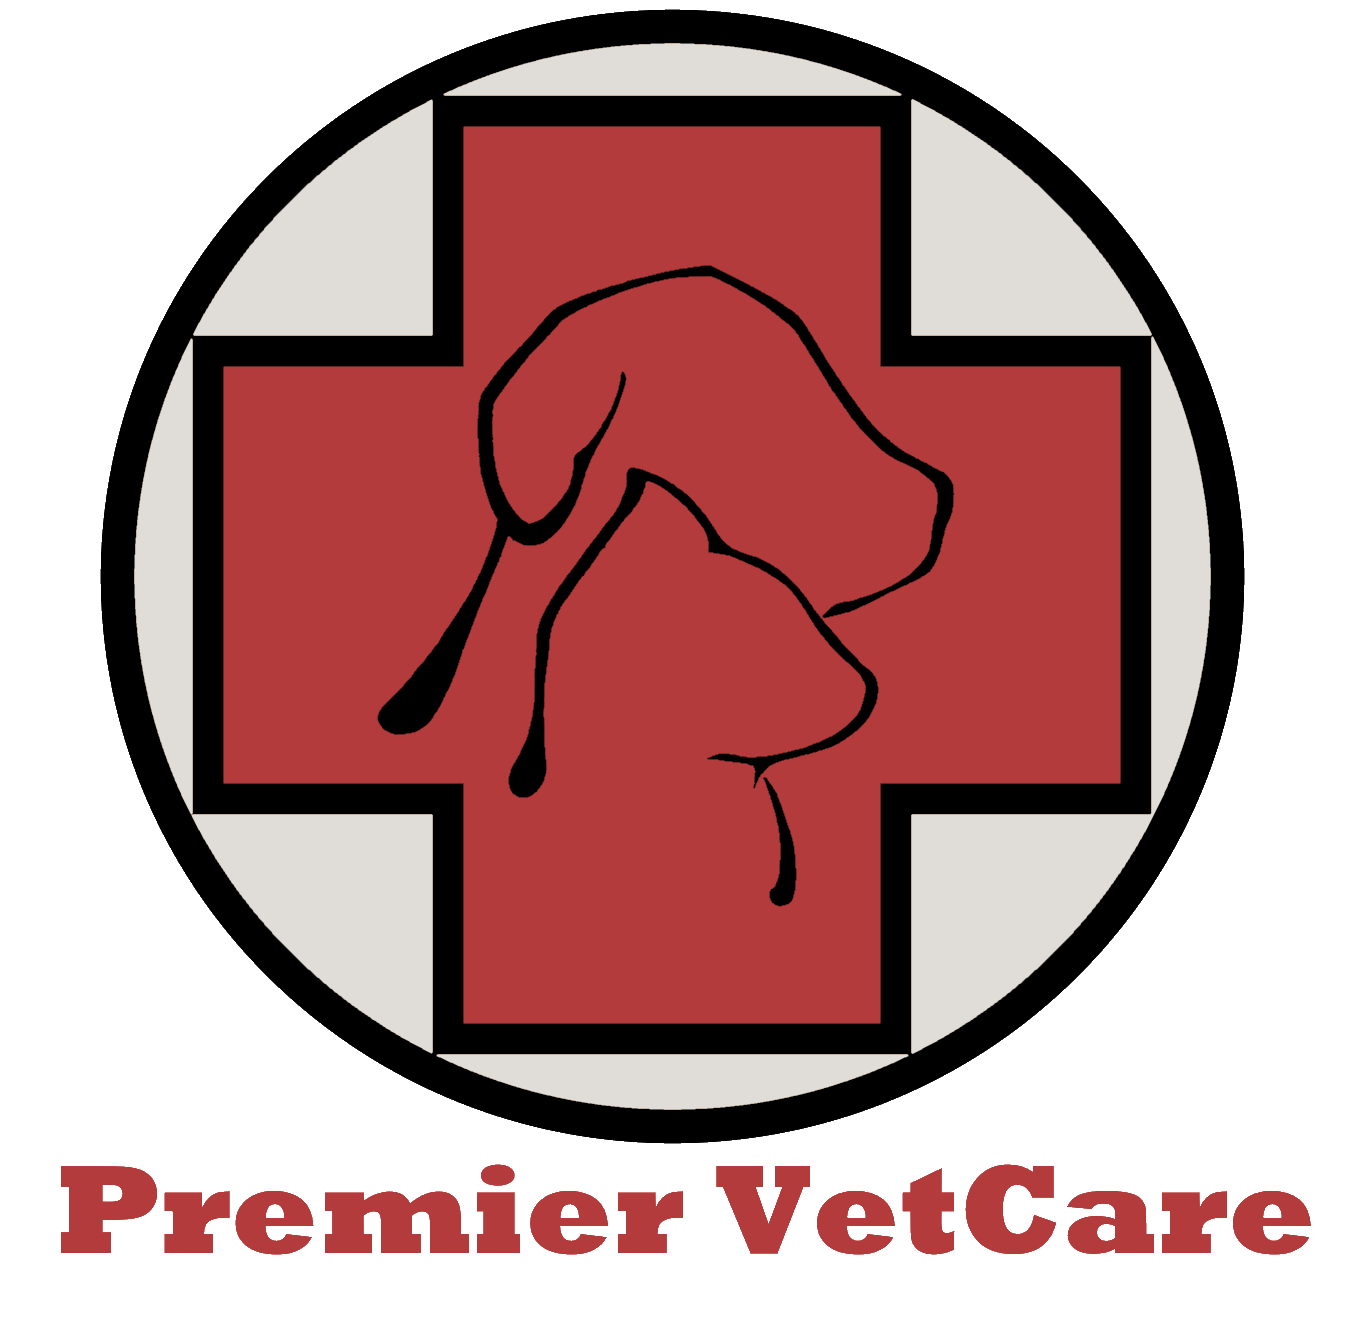 vetcare animal clinic